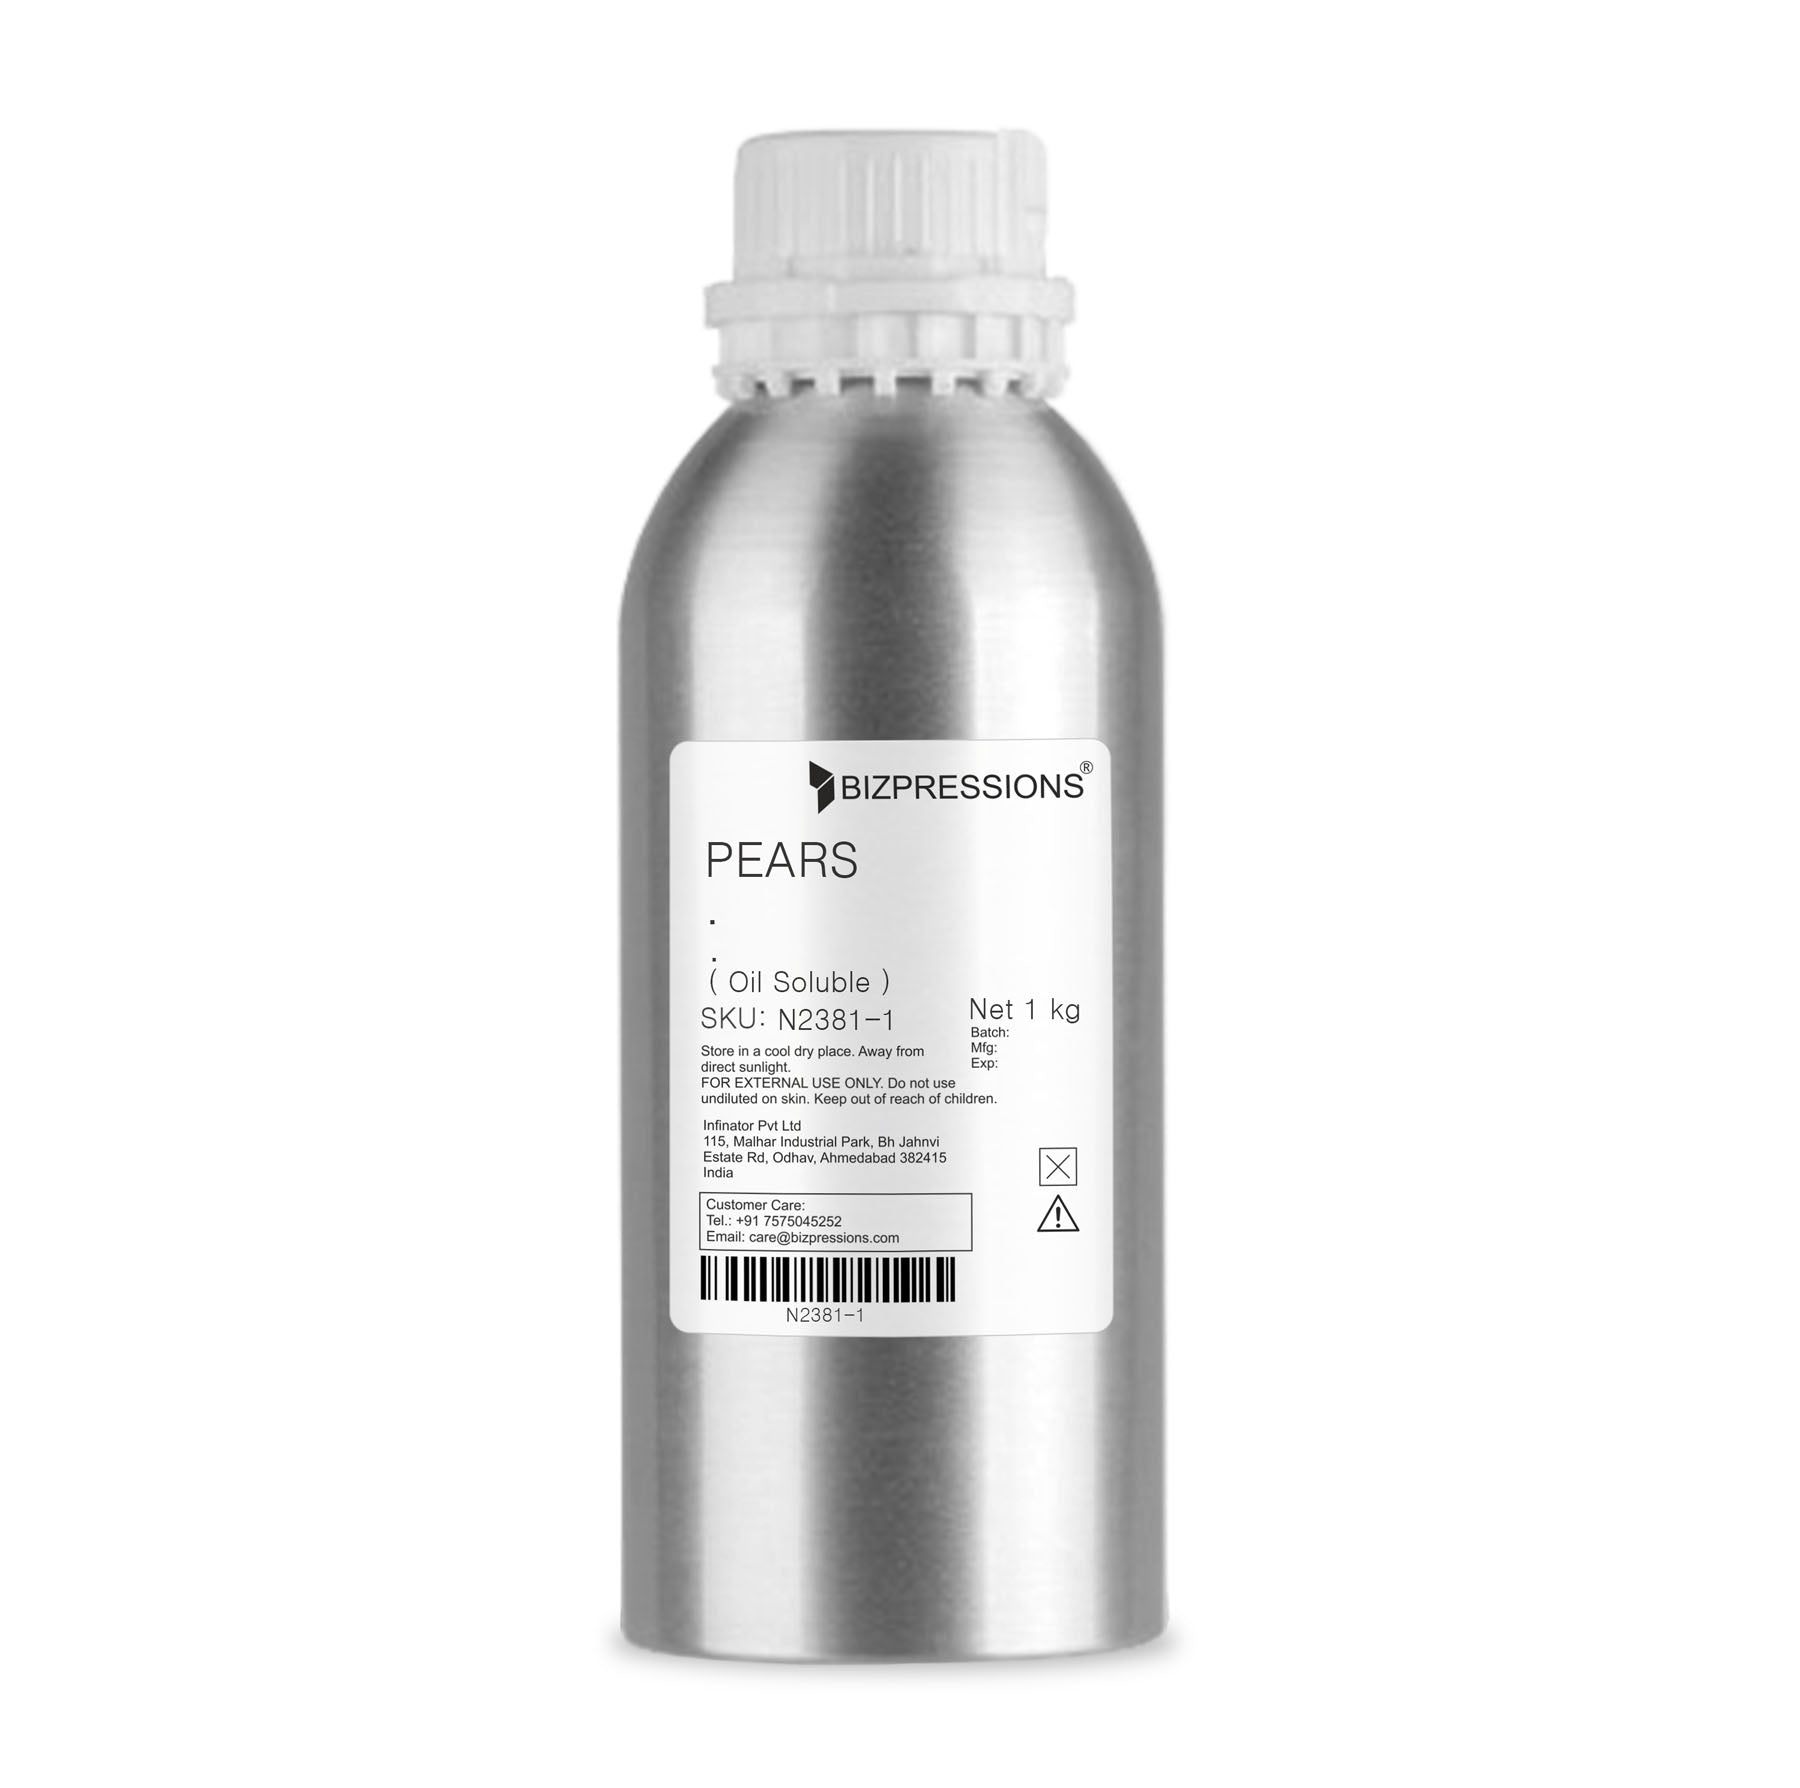 PEARS - Fragrance ( Oil Soluble ) - 1 kg